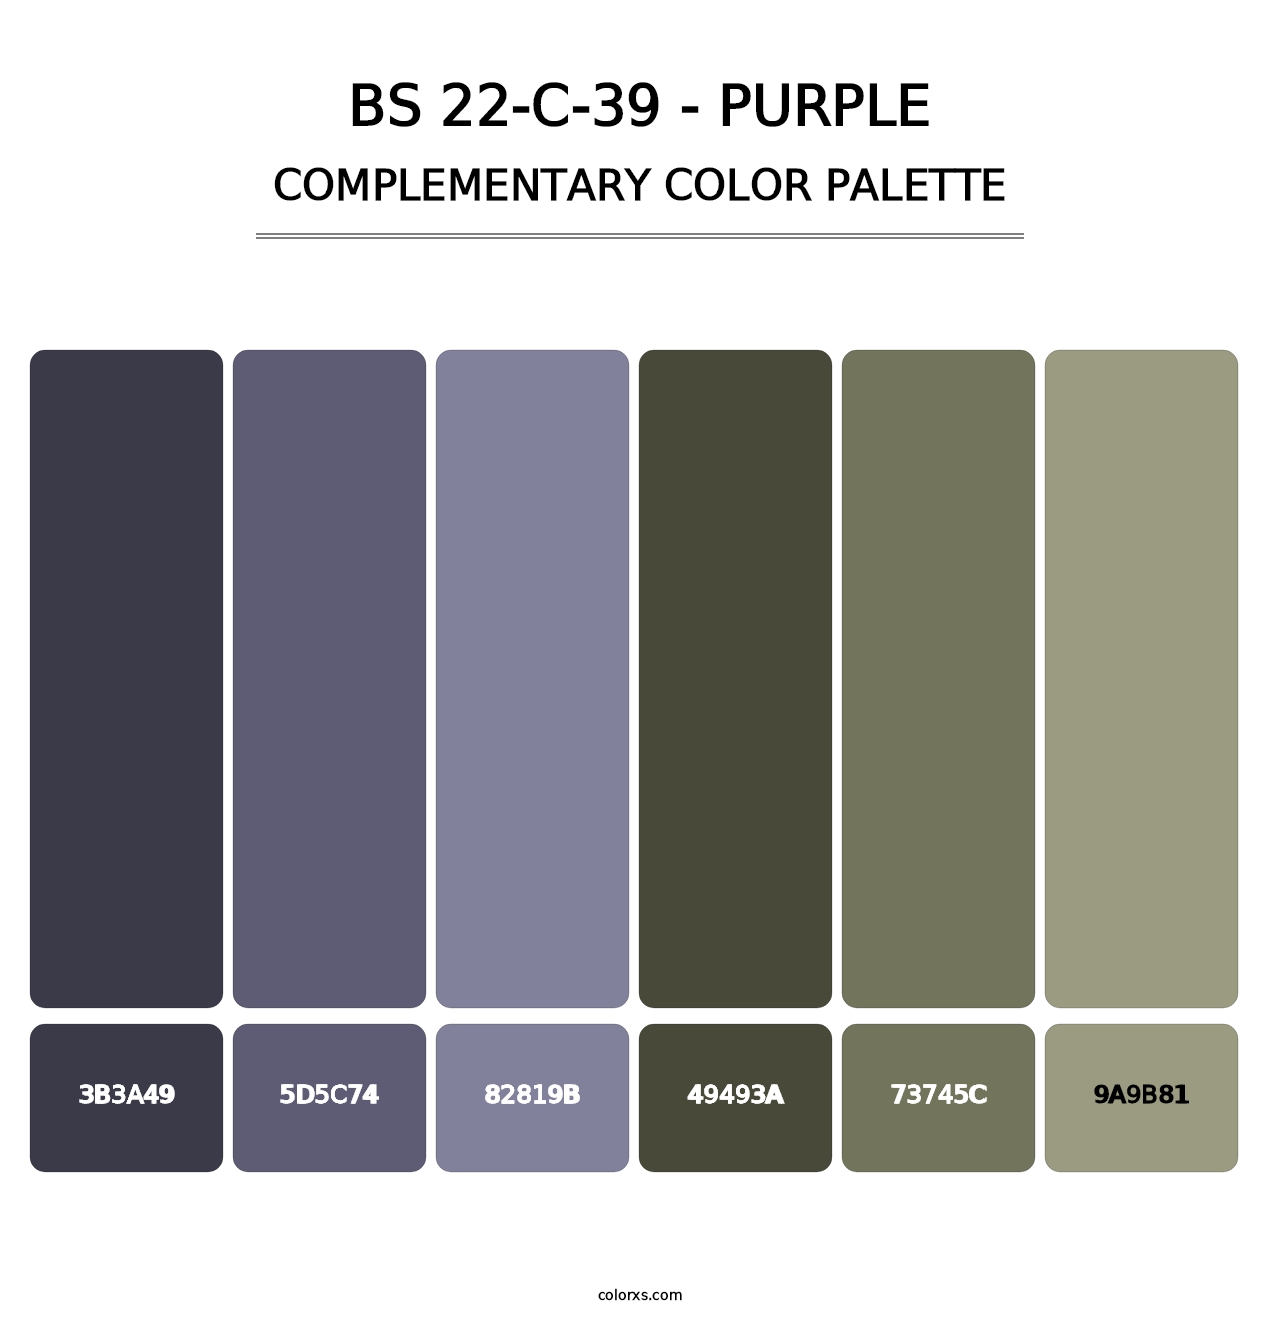 BS 22-C-39 - Purple - Complementary Color Palette